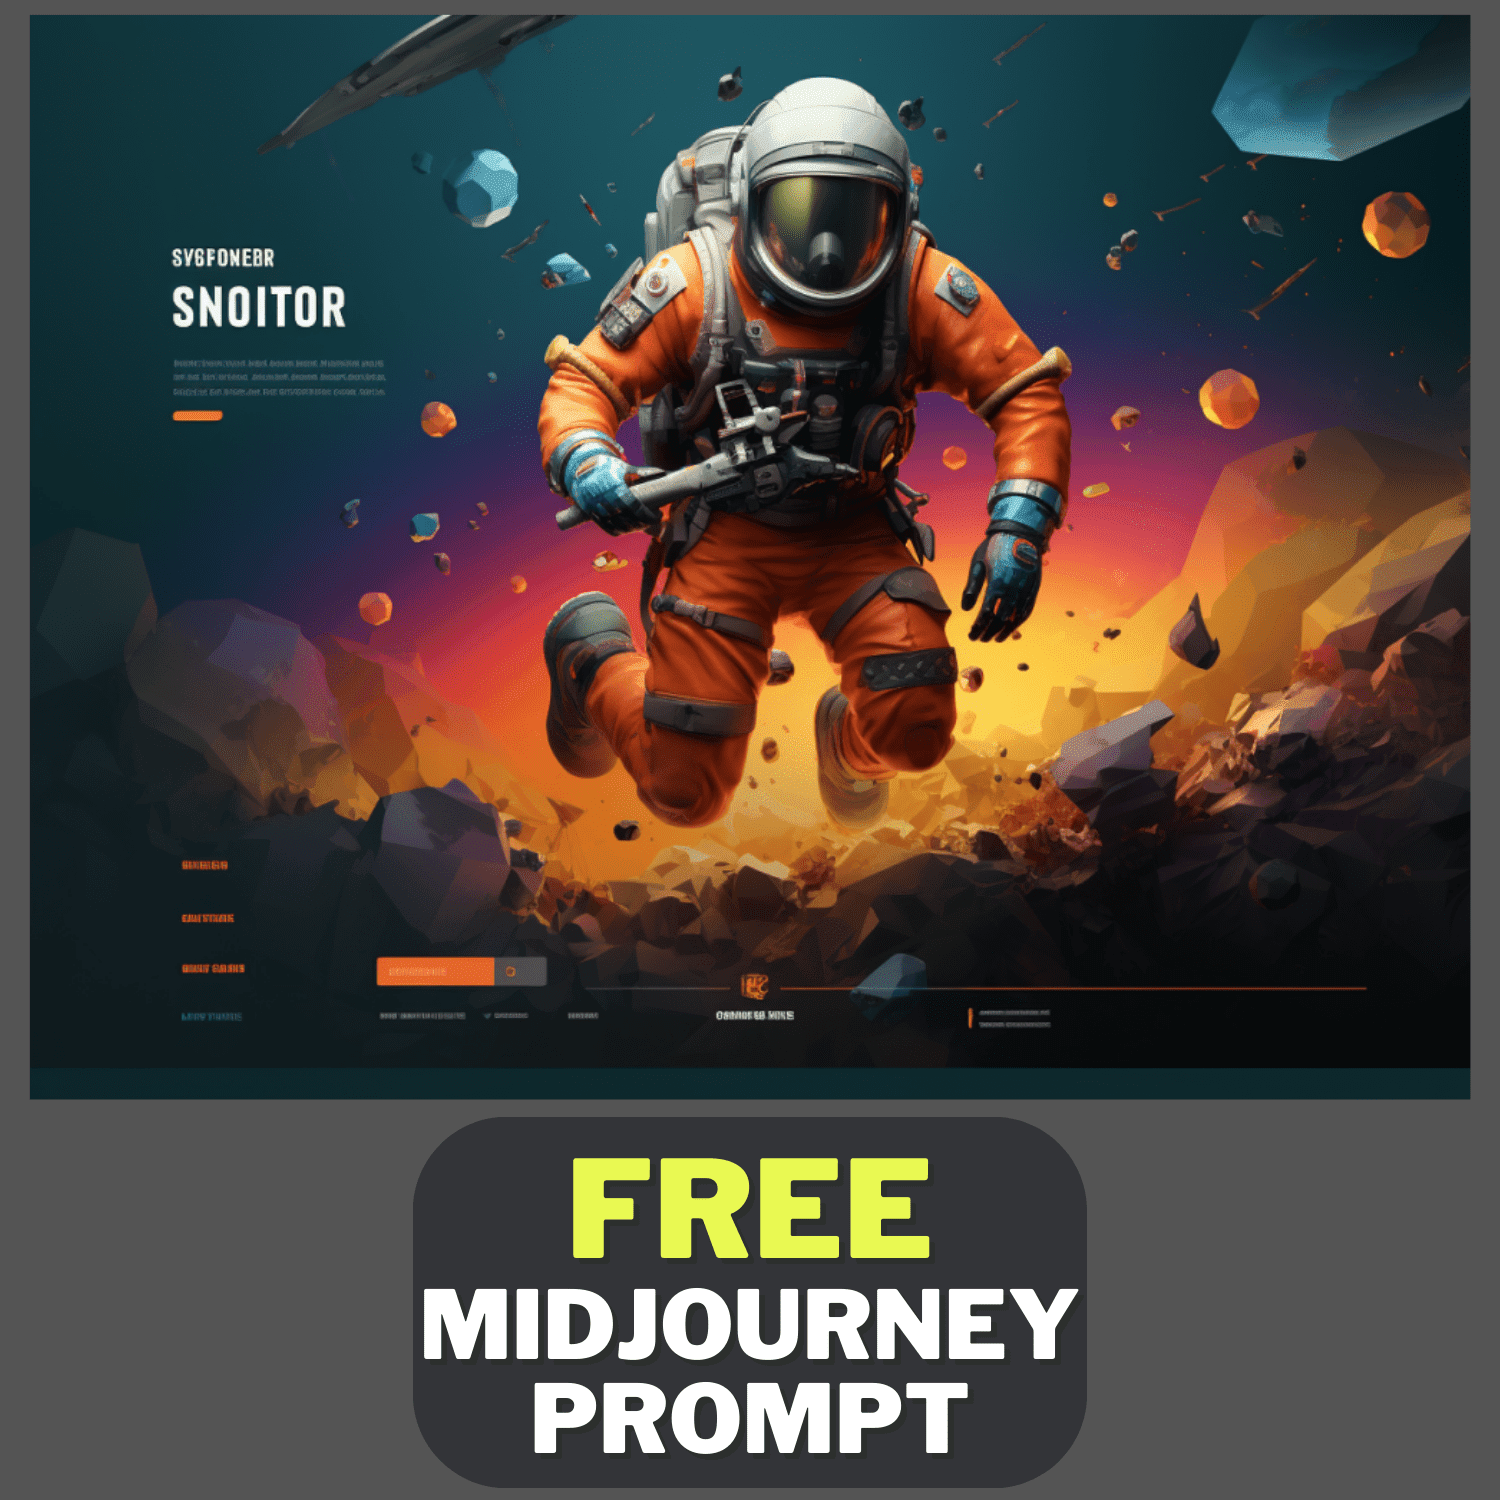 Video Game Website Design Free Midjourney Prompt 1